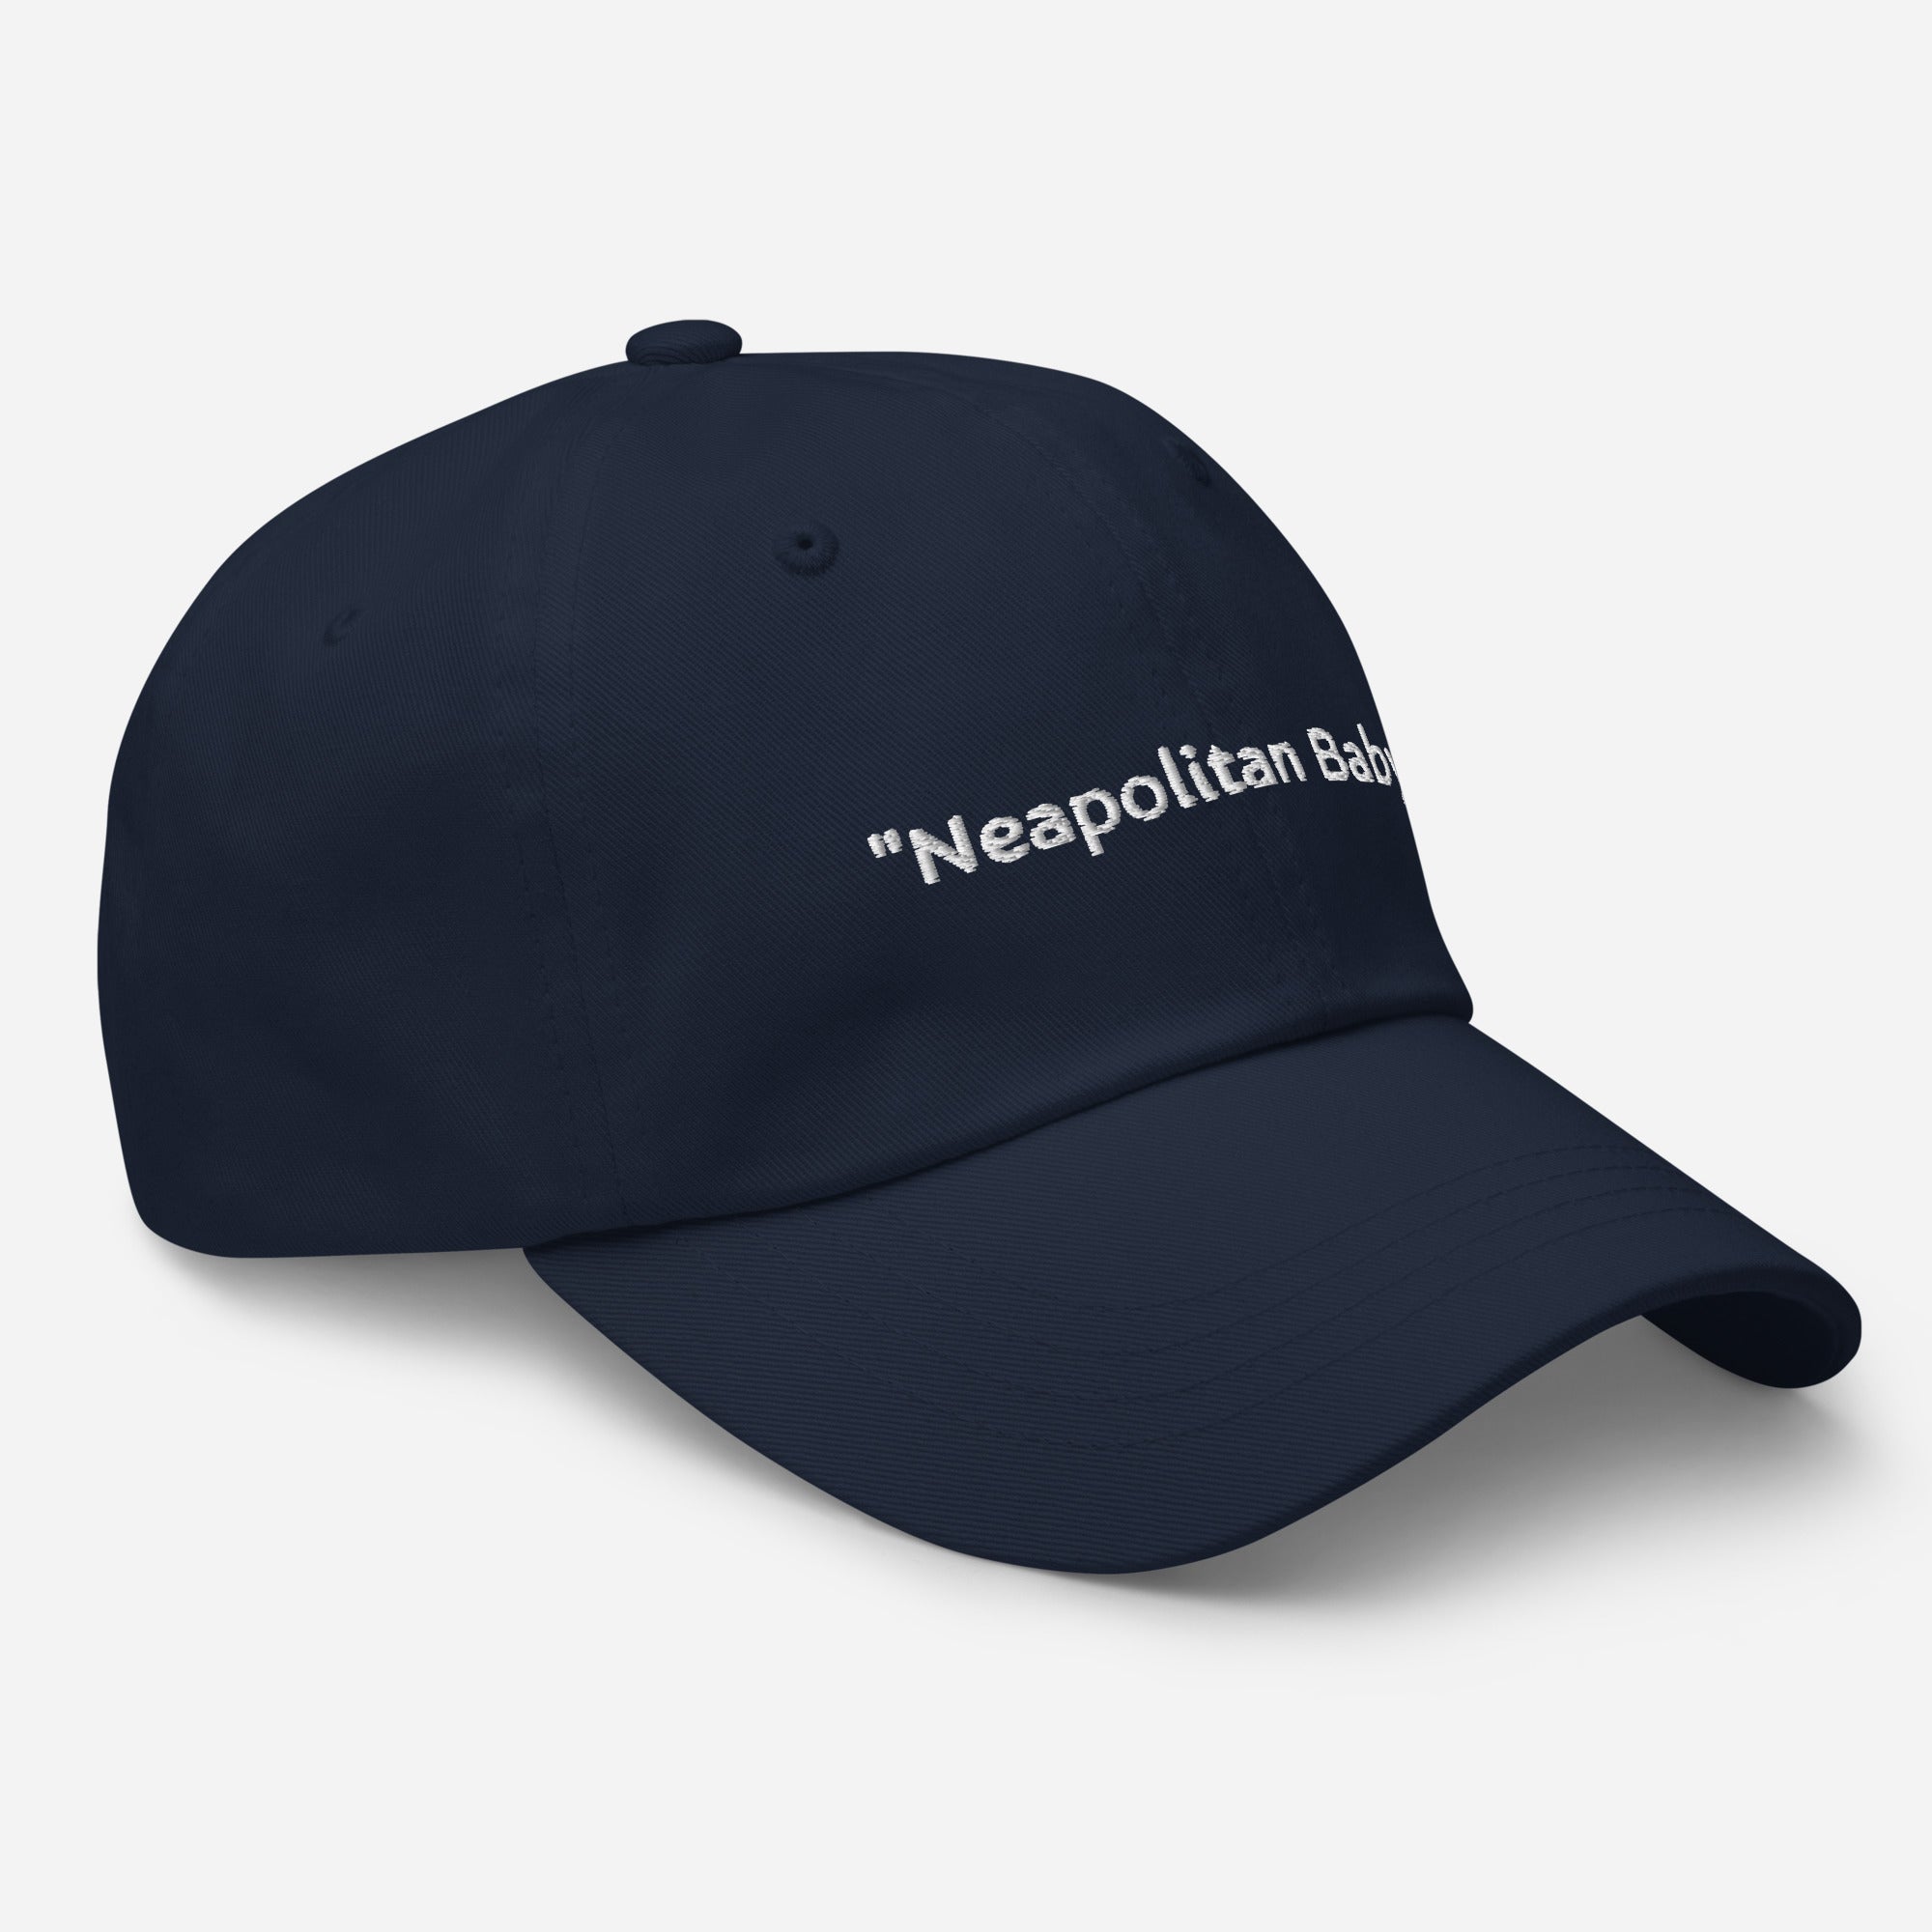 "Neapolitan Baby" hat